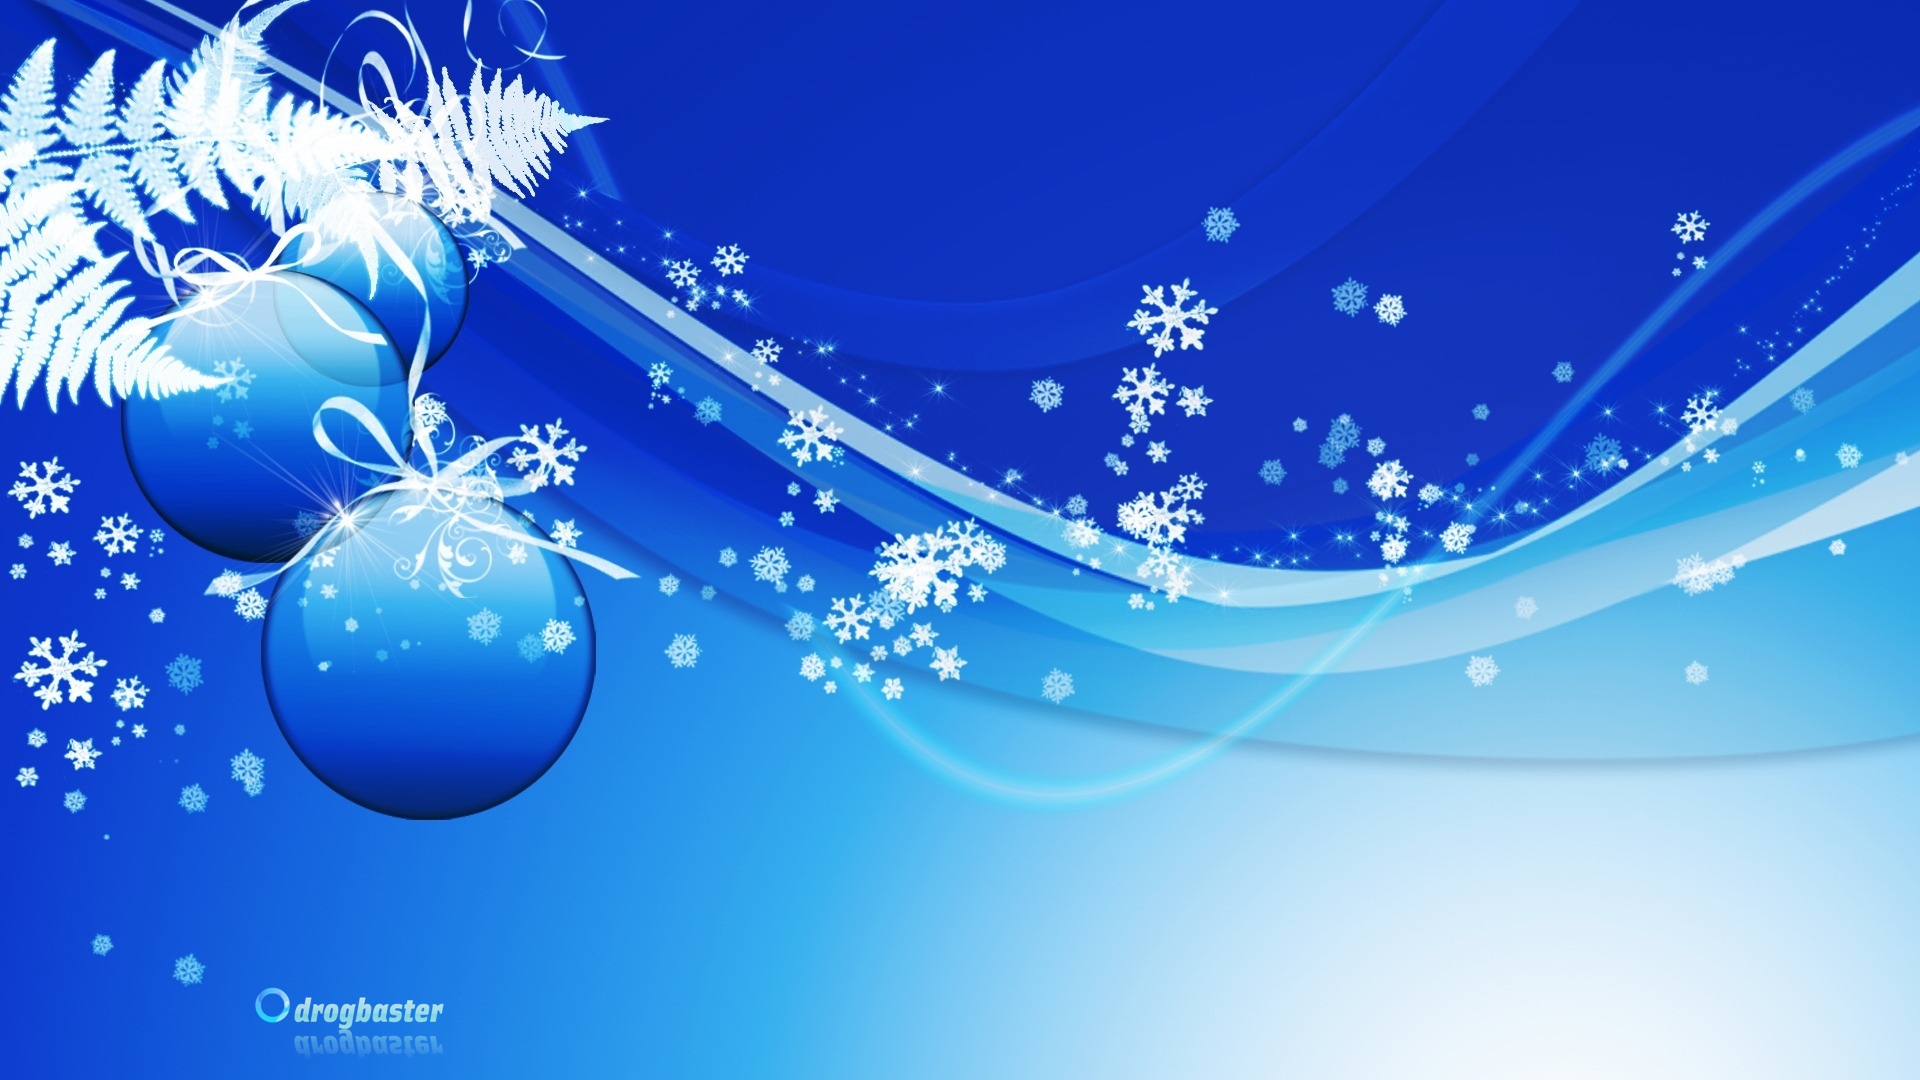 Foto Di Natale Per Desktop.Sfondi Wallpapers Tema Natalizio Sfondi Di Natale Gratis